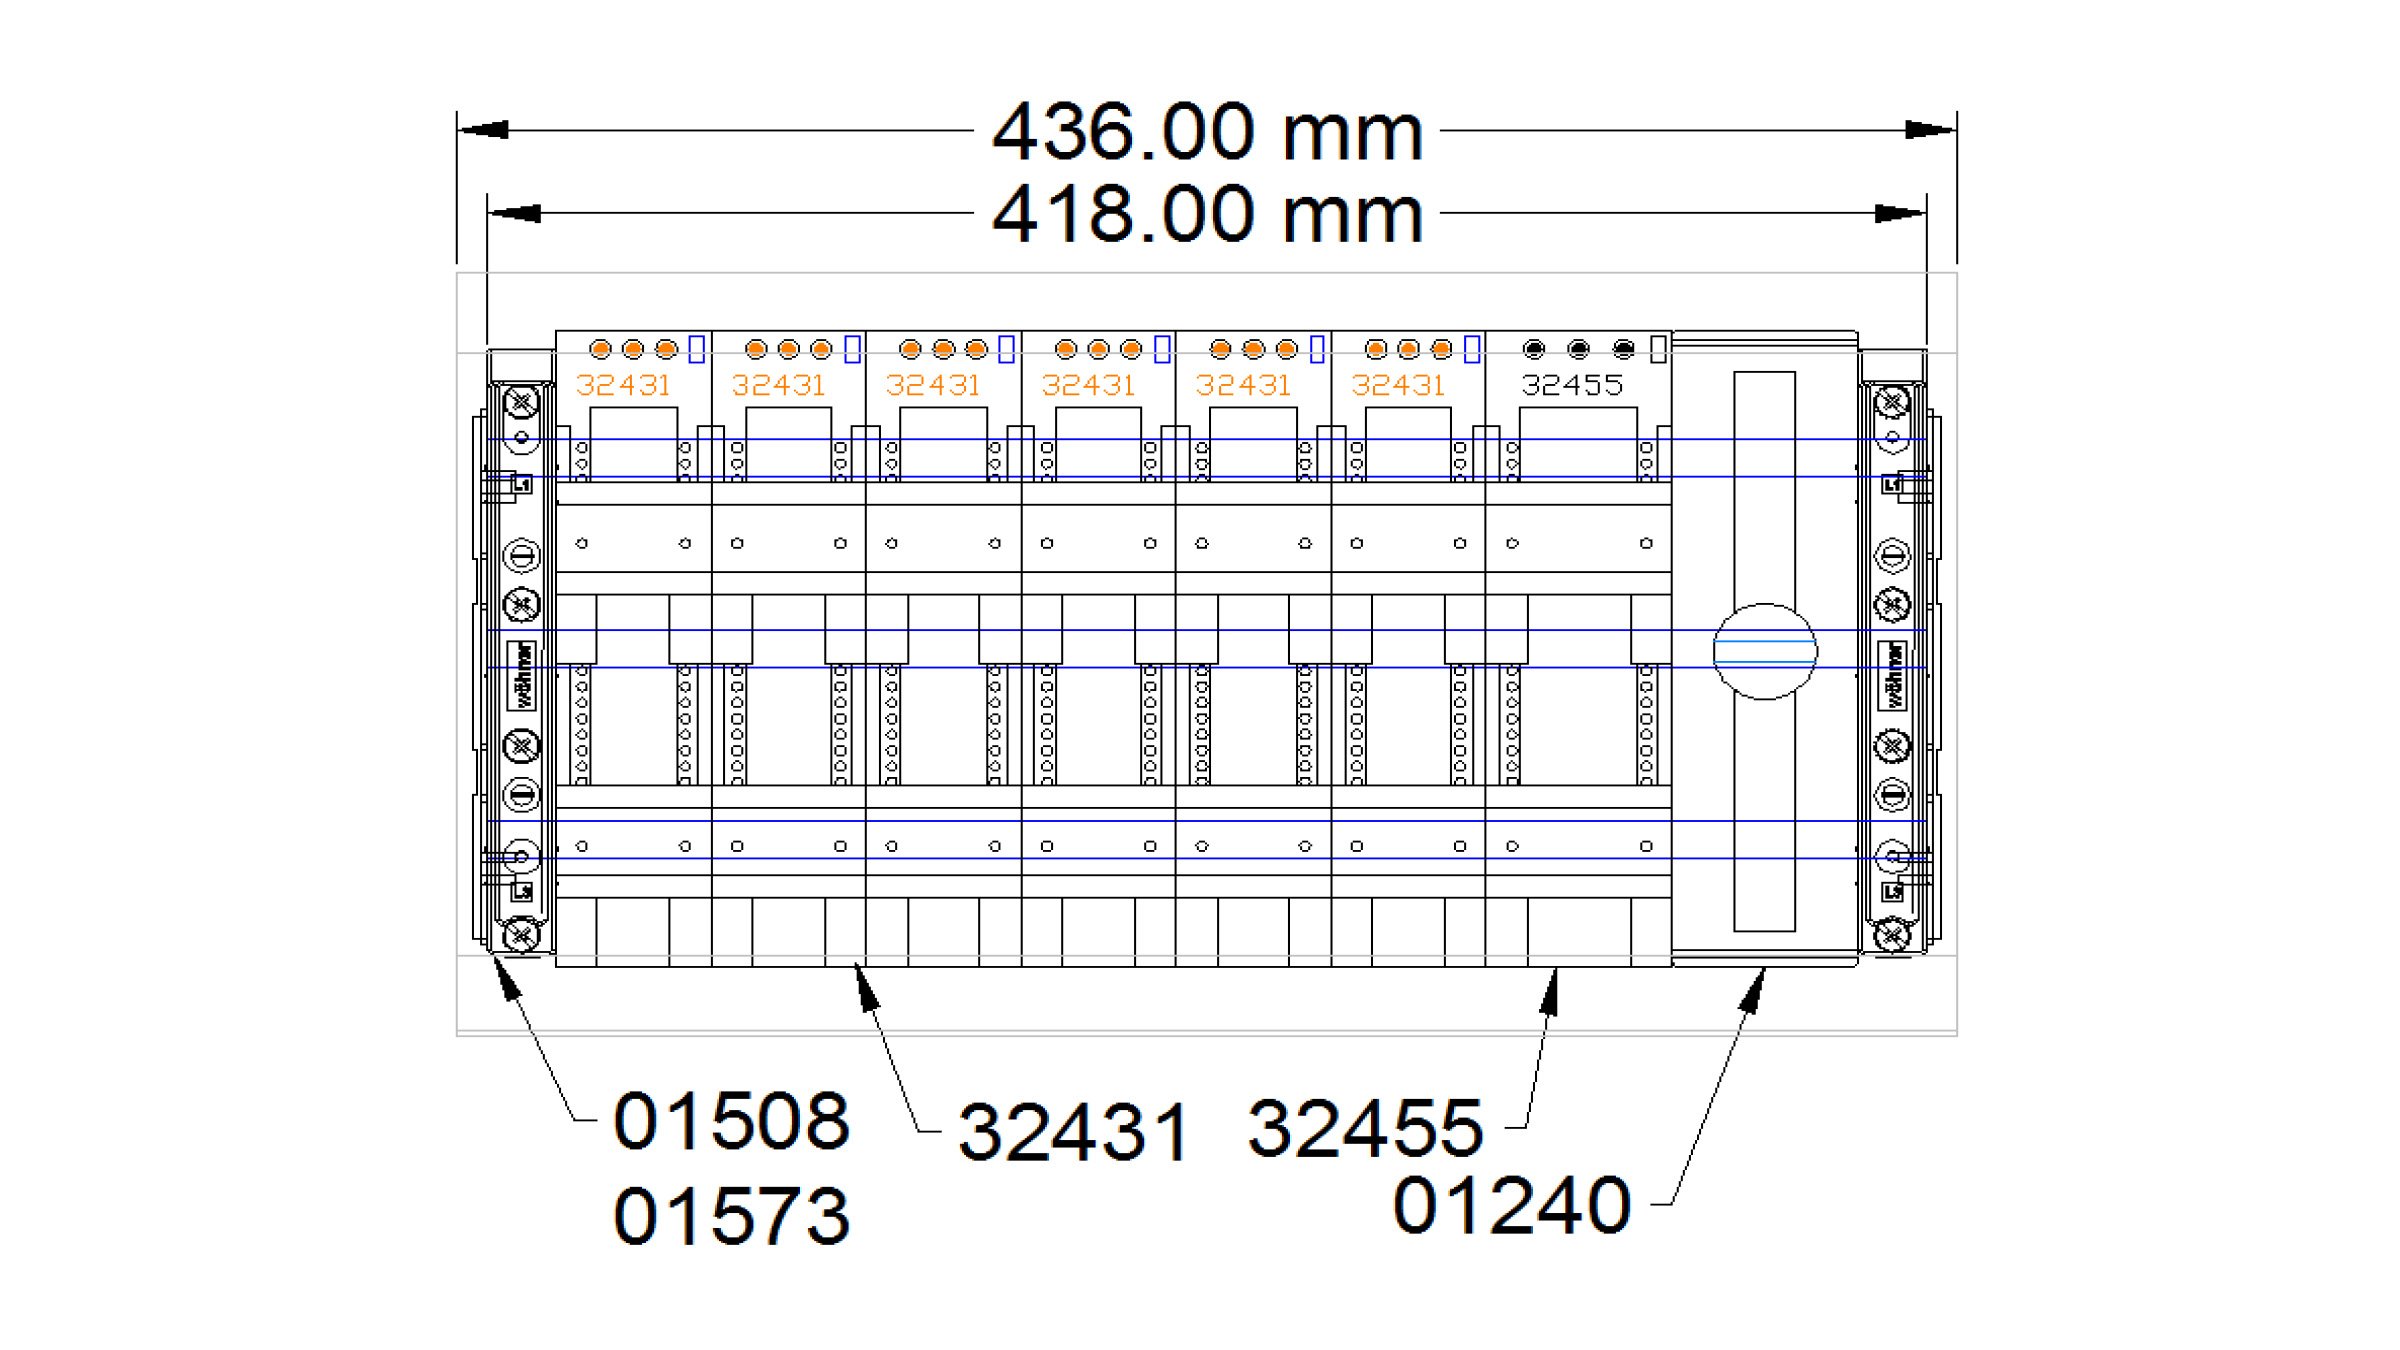 Wohner 60mm Busbar system layout for Sprecher & Schuh demonstration panel